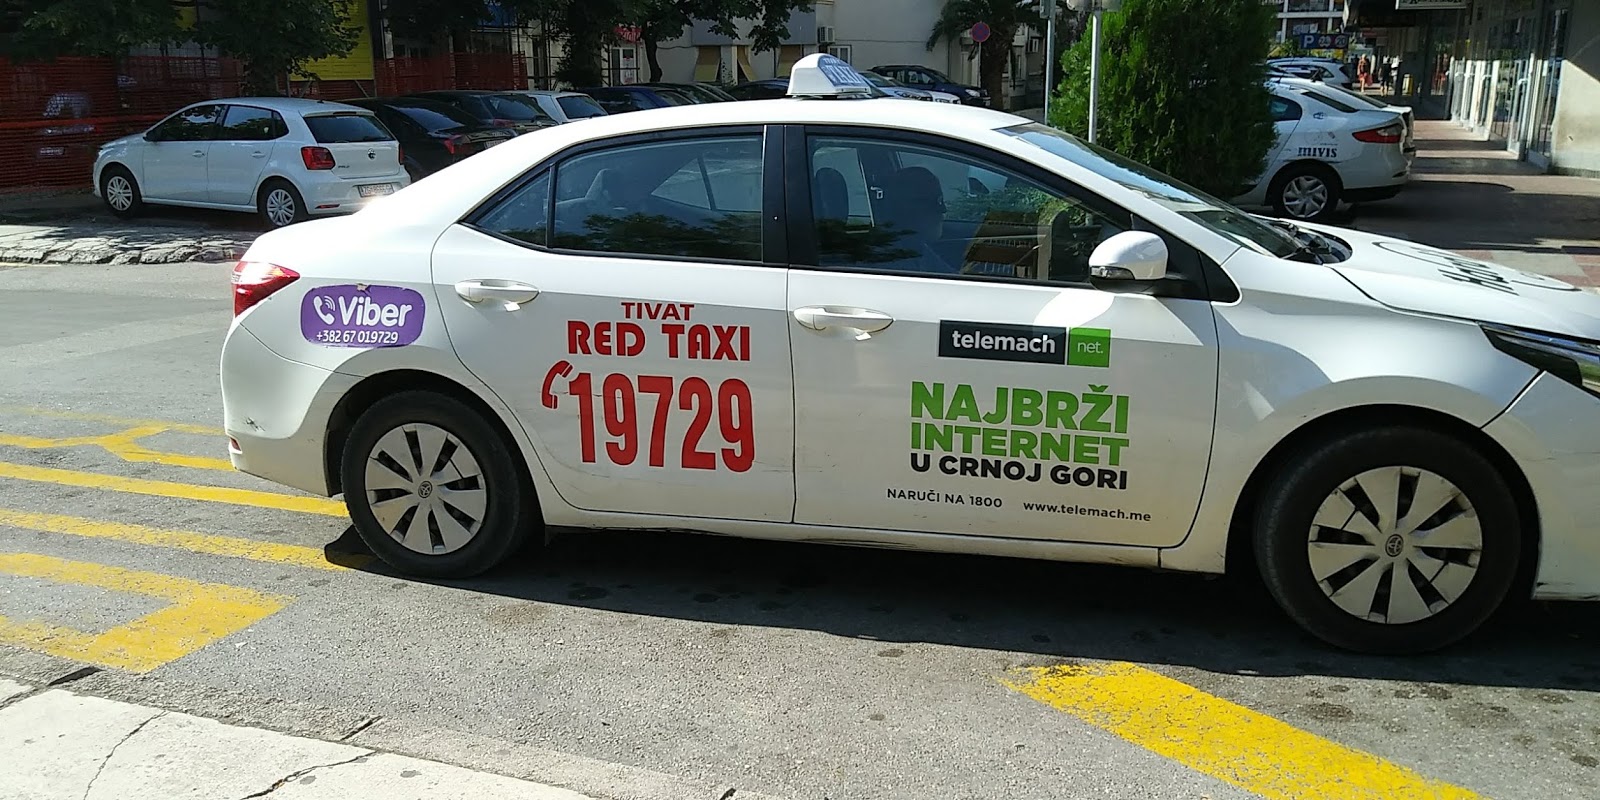 Такси адлер номер телефона. Сервис такси в Черногории. Ред такси Балашиха. Красное такси. Много такси.